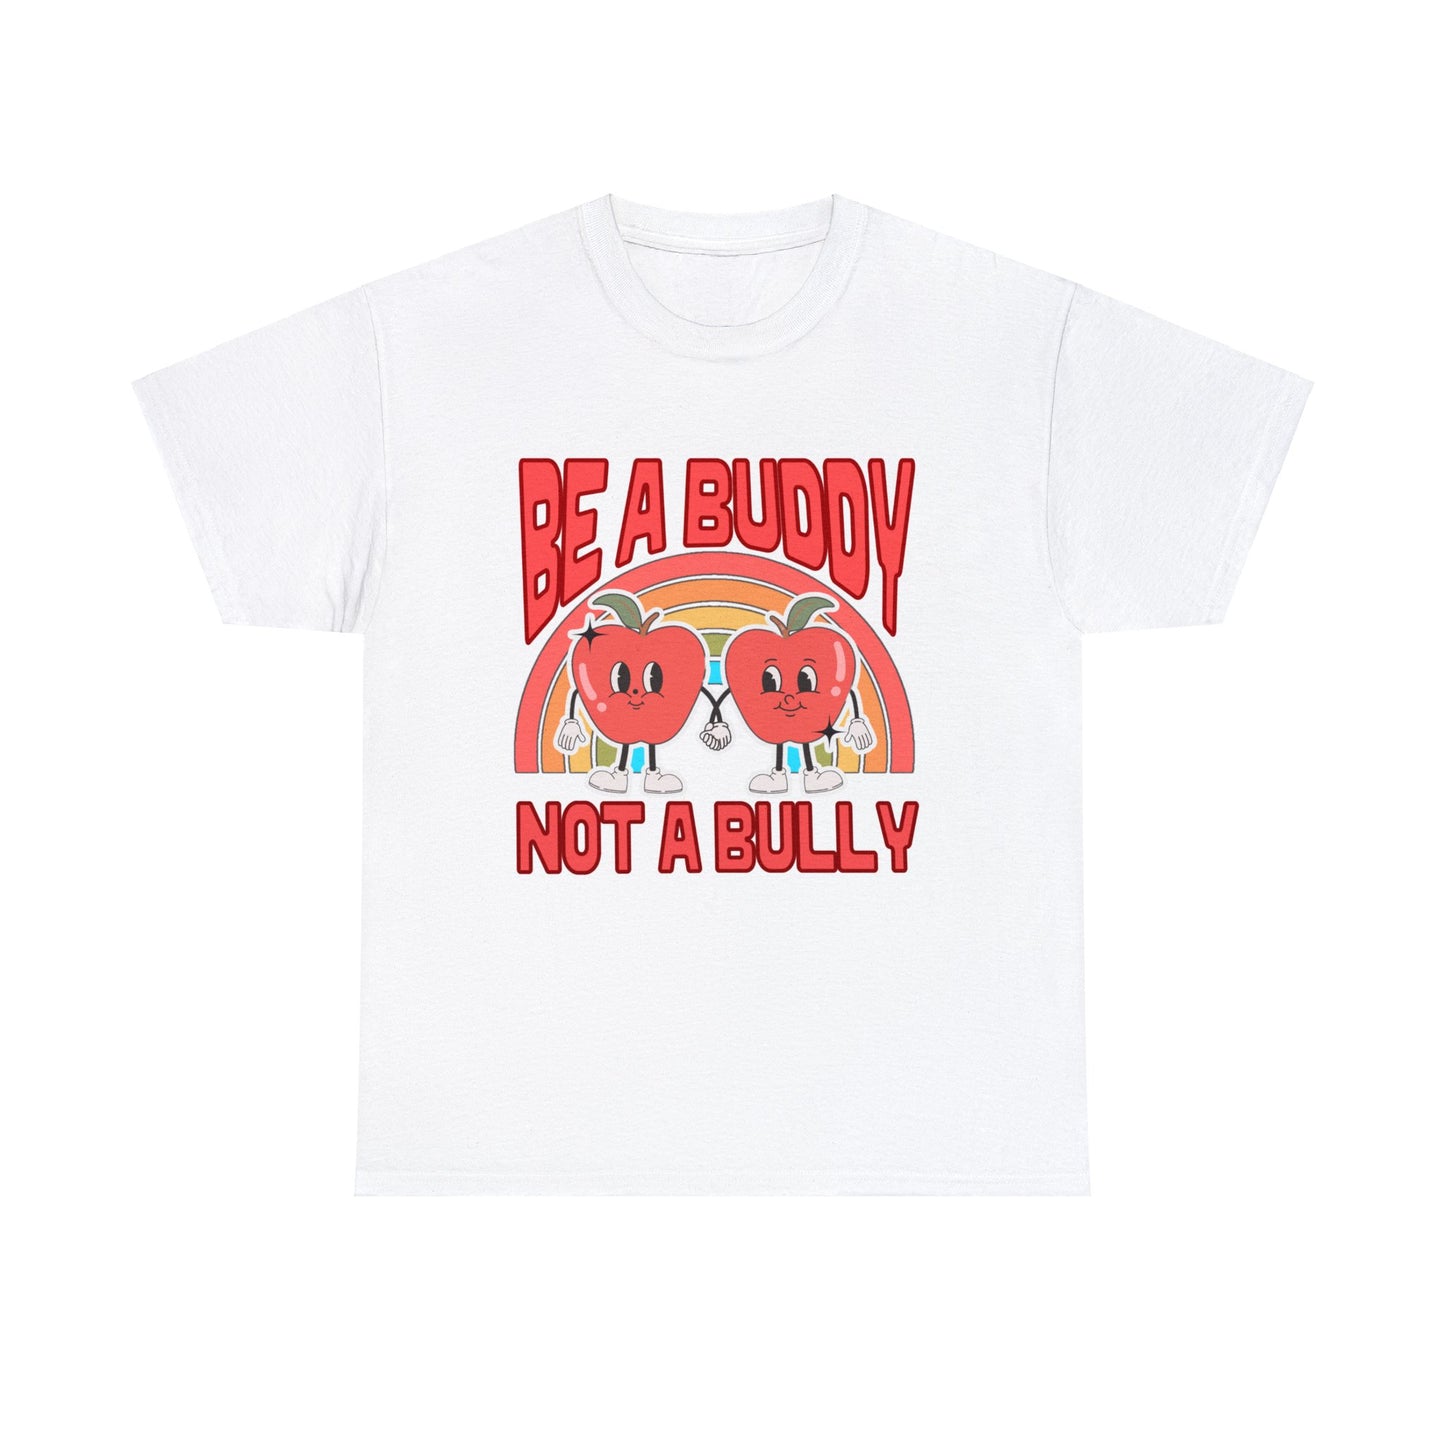 Be a Buddy, Not a Bully - Unisex T-Shirt